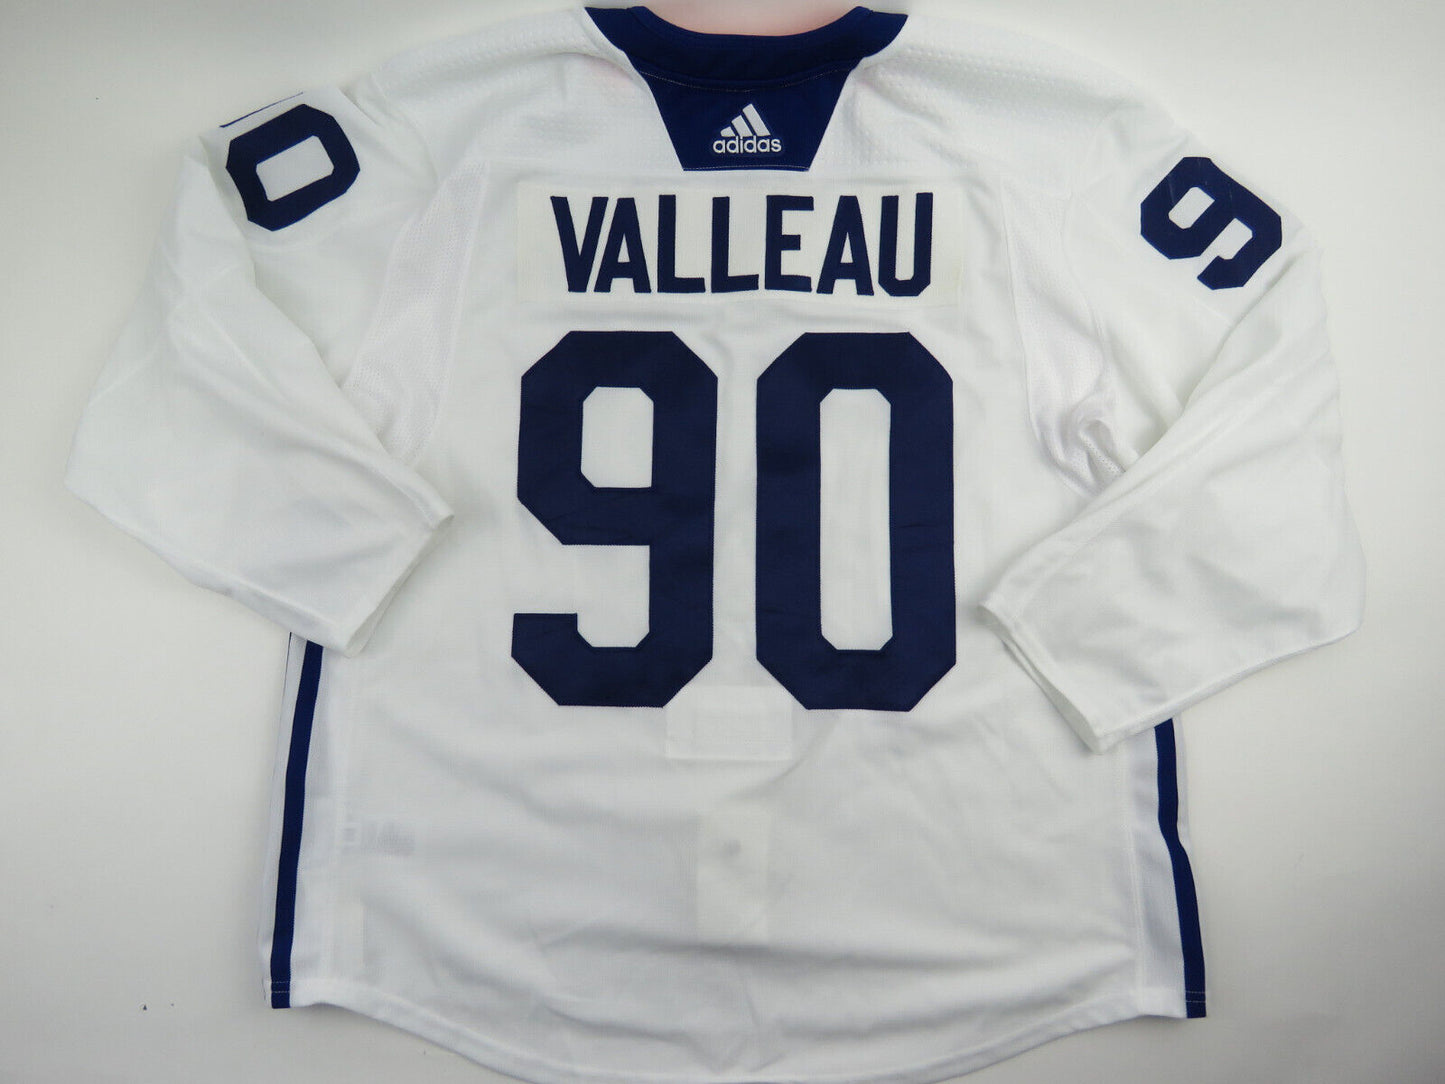 Adidas Toronto Maple Leafs Practice Worn Authentic NHL Hockey Jersey #90 Size 58